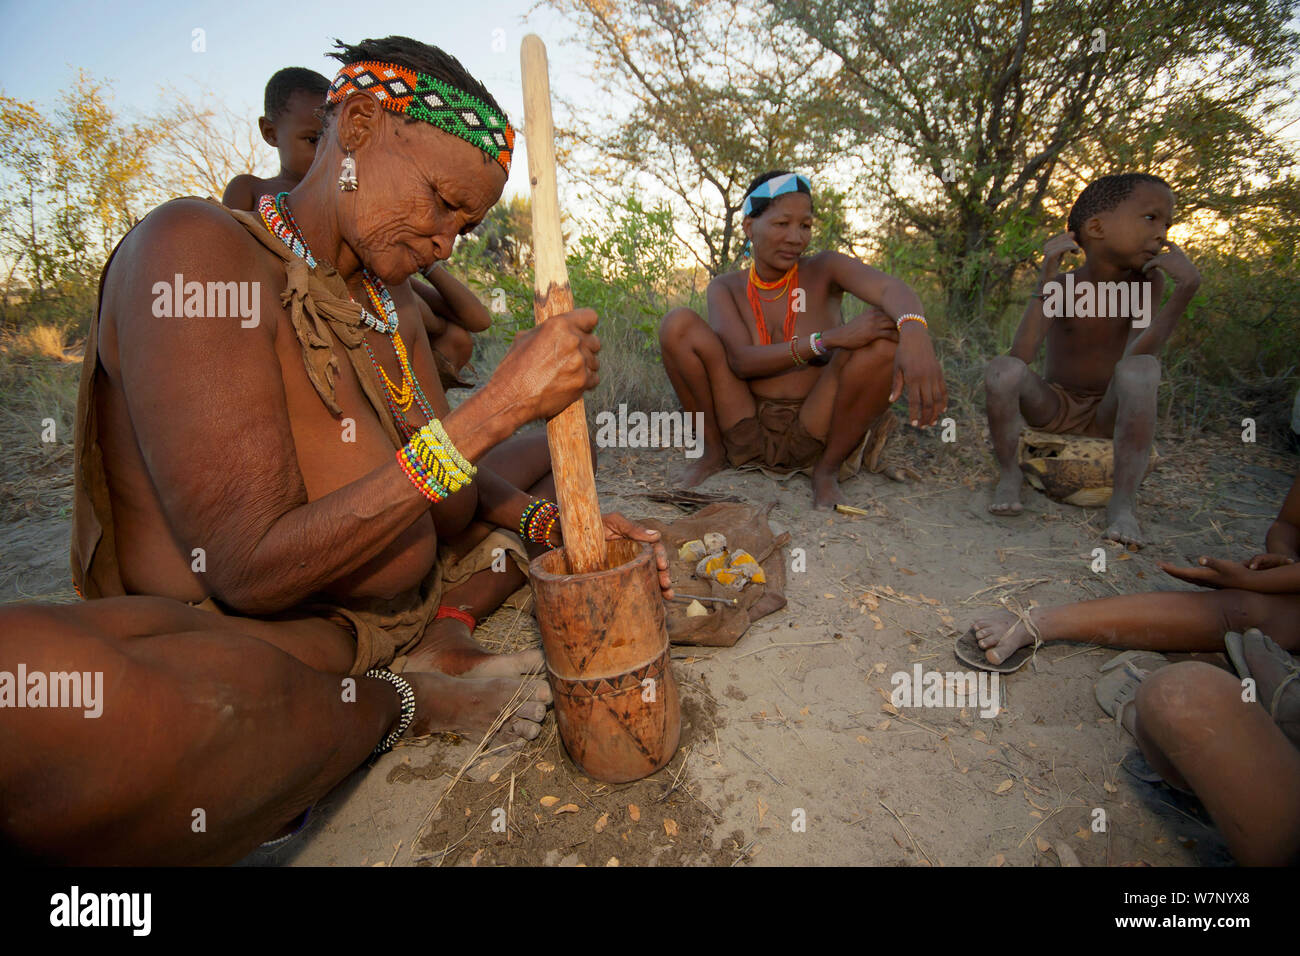 Zu/'hoasi Bushman women preparing food using a wooden pestle and mortar in the Kalahari, Botswana. April 2012. Stock Photo